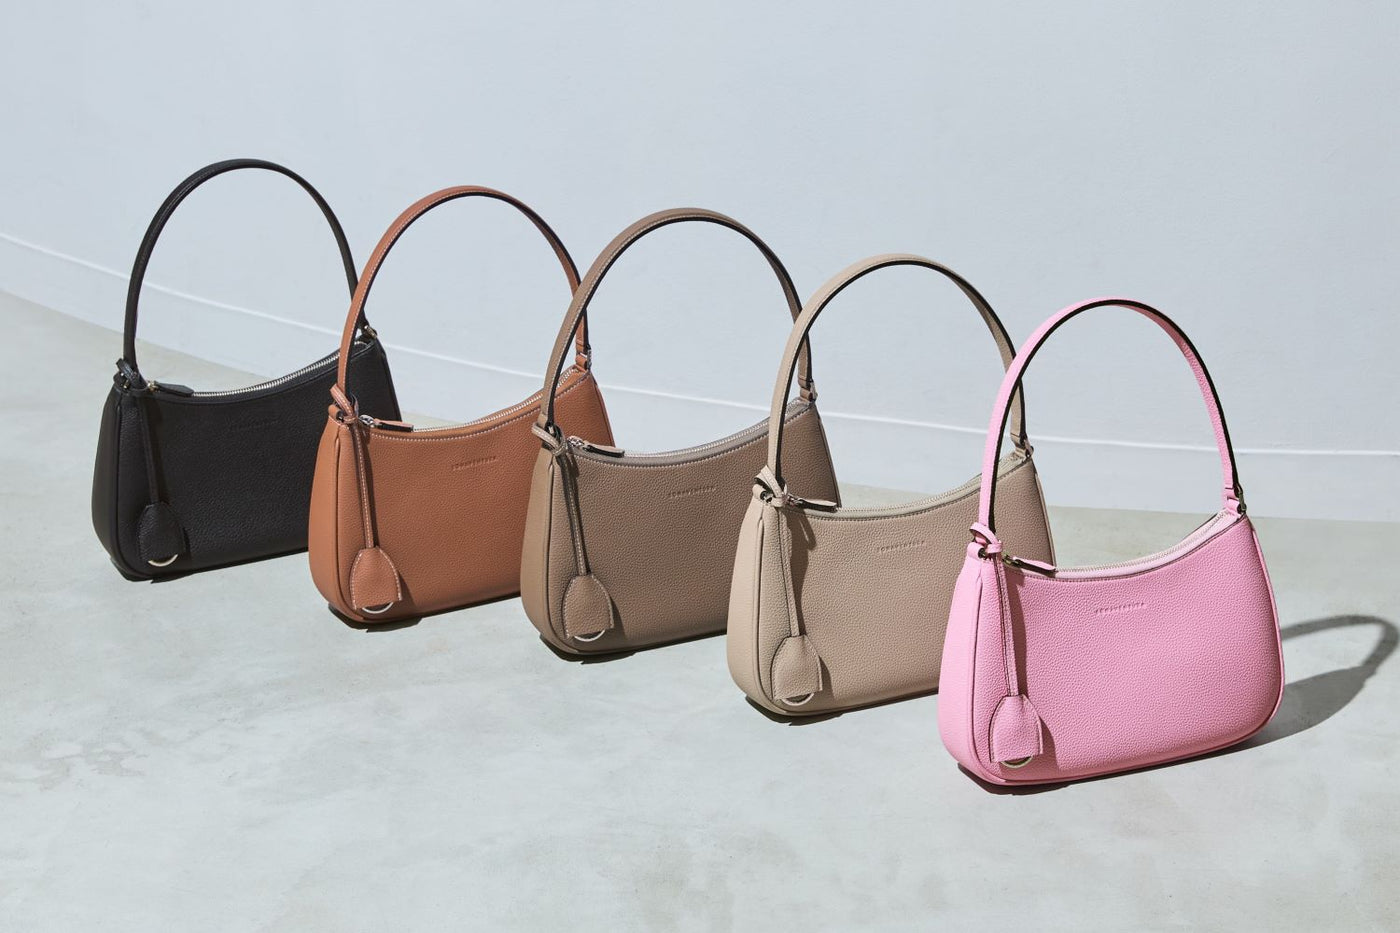 New: The Chiara handbag in Fjord calfskin leather-BONAVENTURA